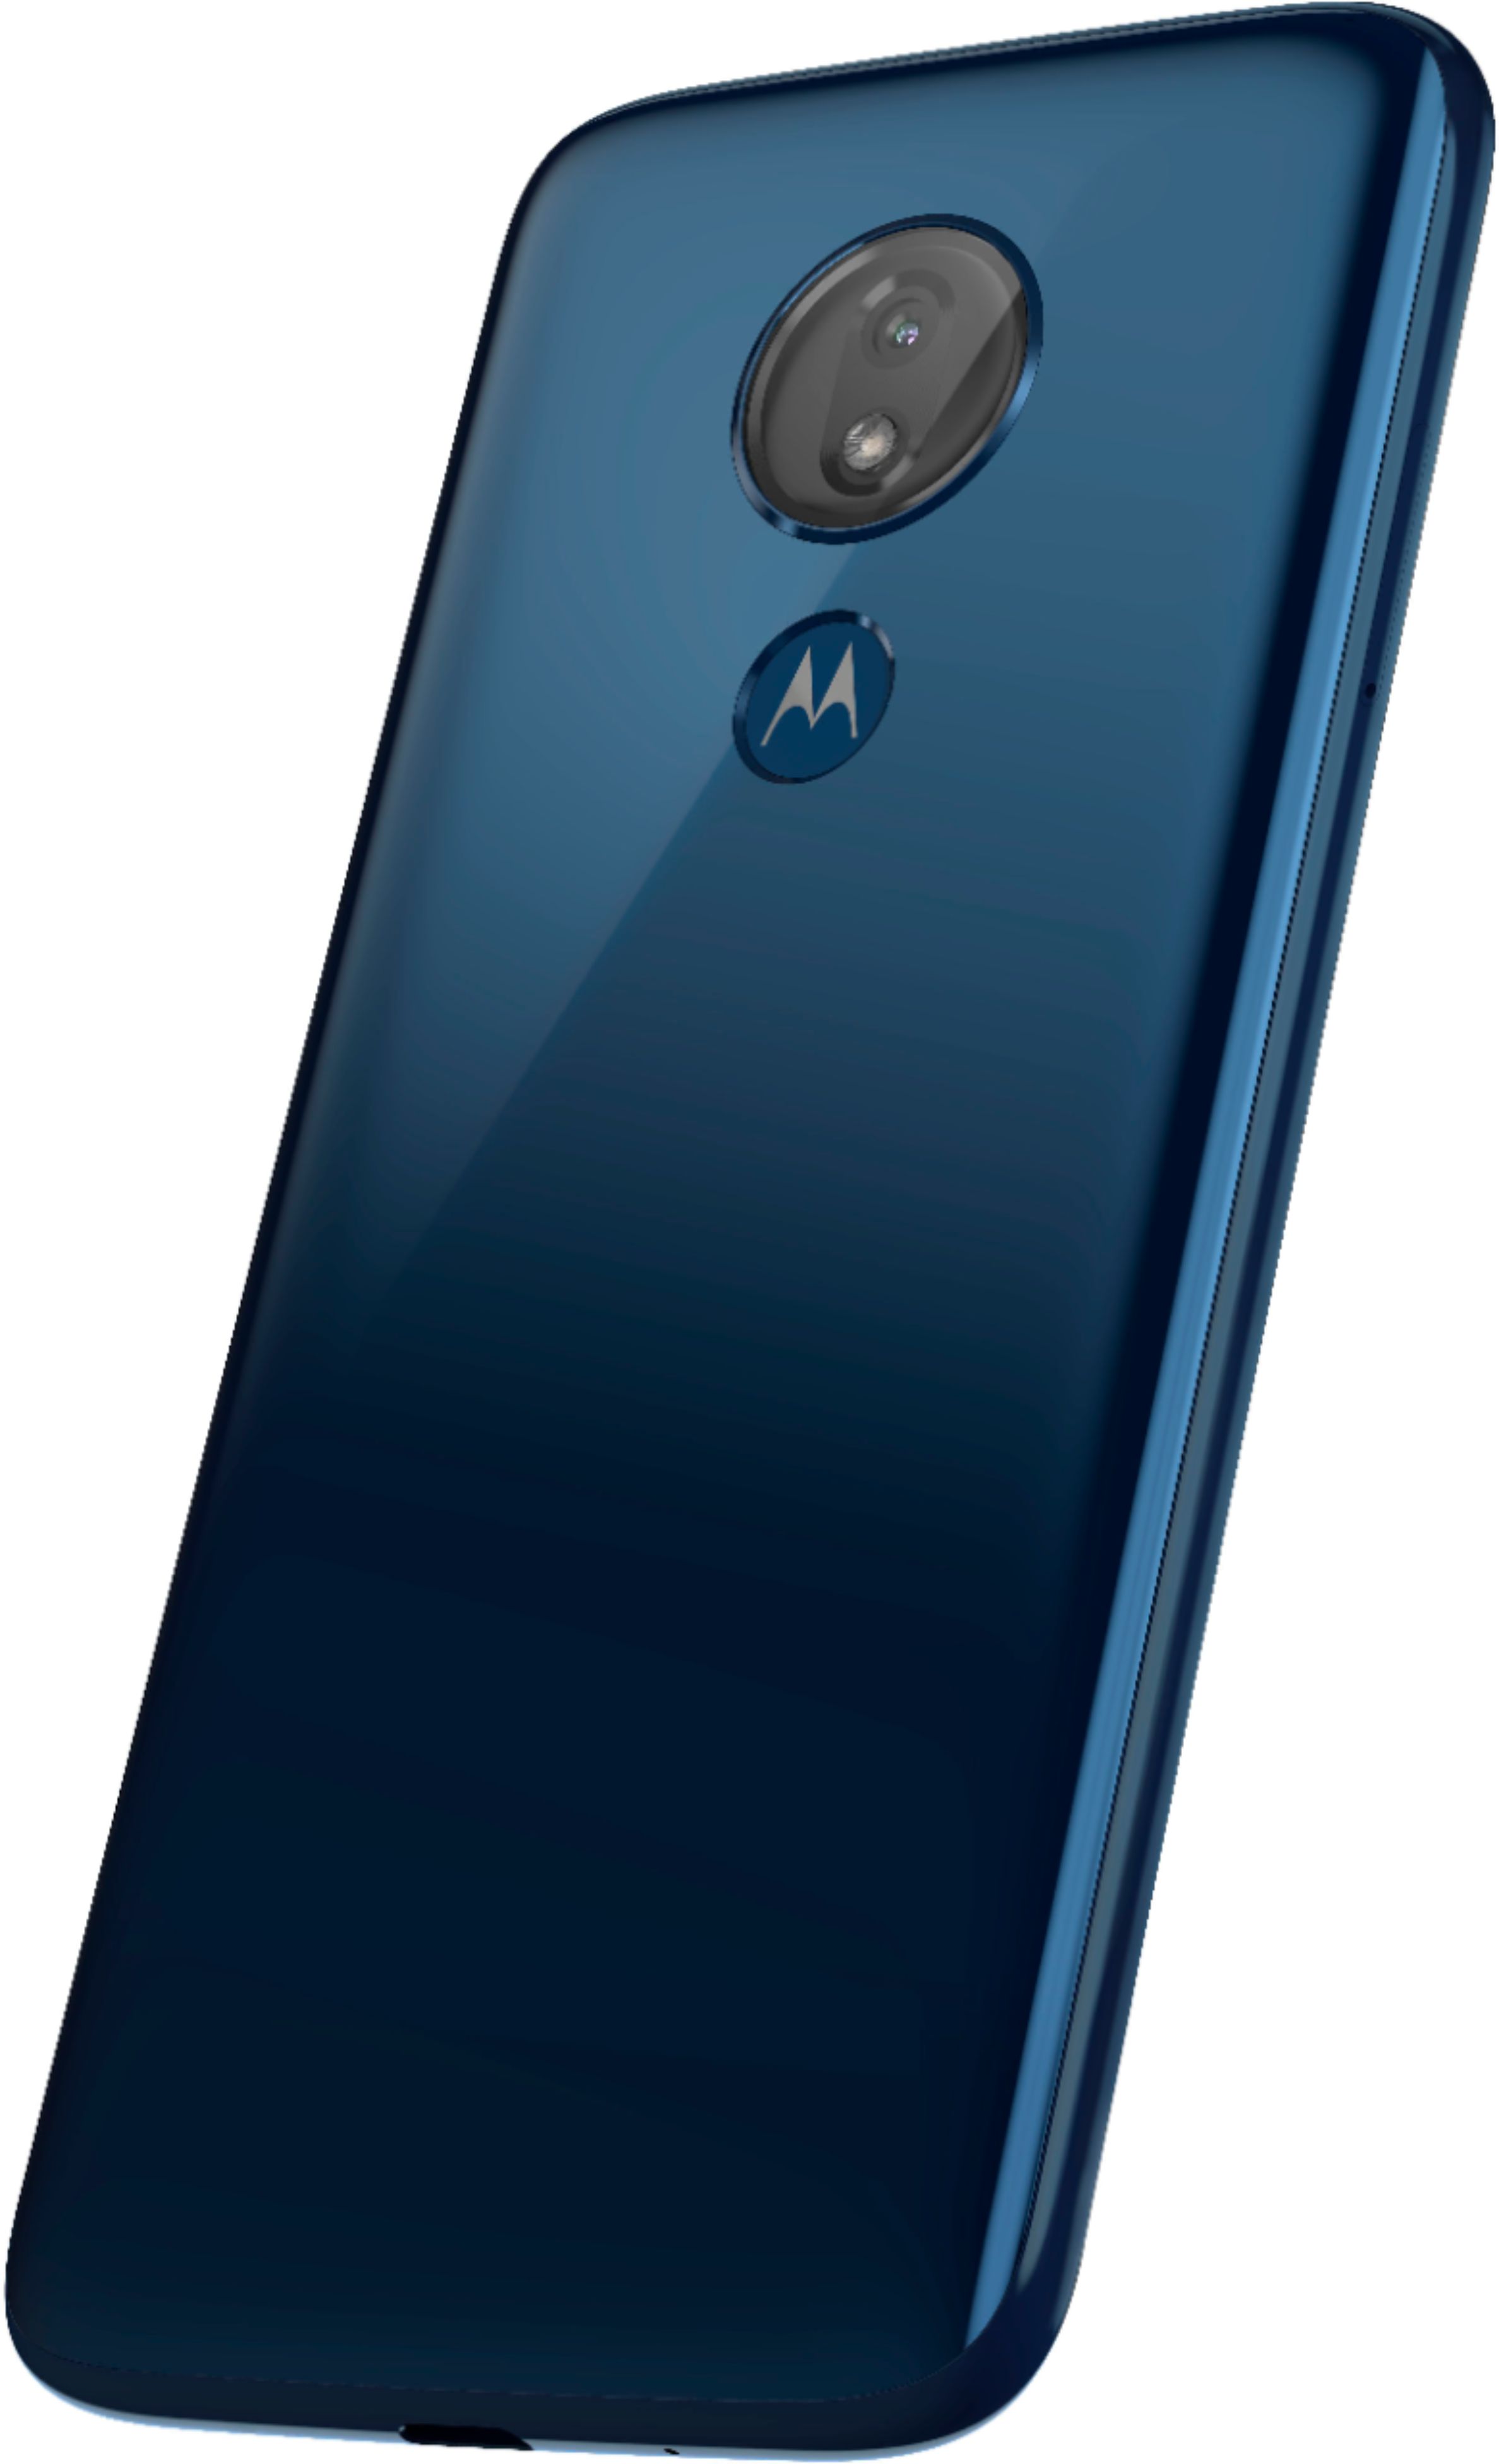 Motorola MOTO G7 Power - GSM Unlocked 32GB Android Smartphone - Marine Blue  (Renewed)